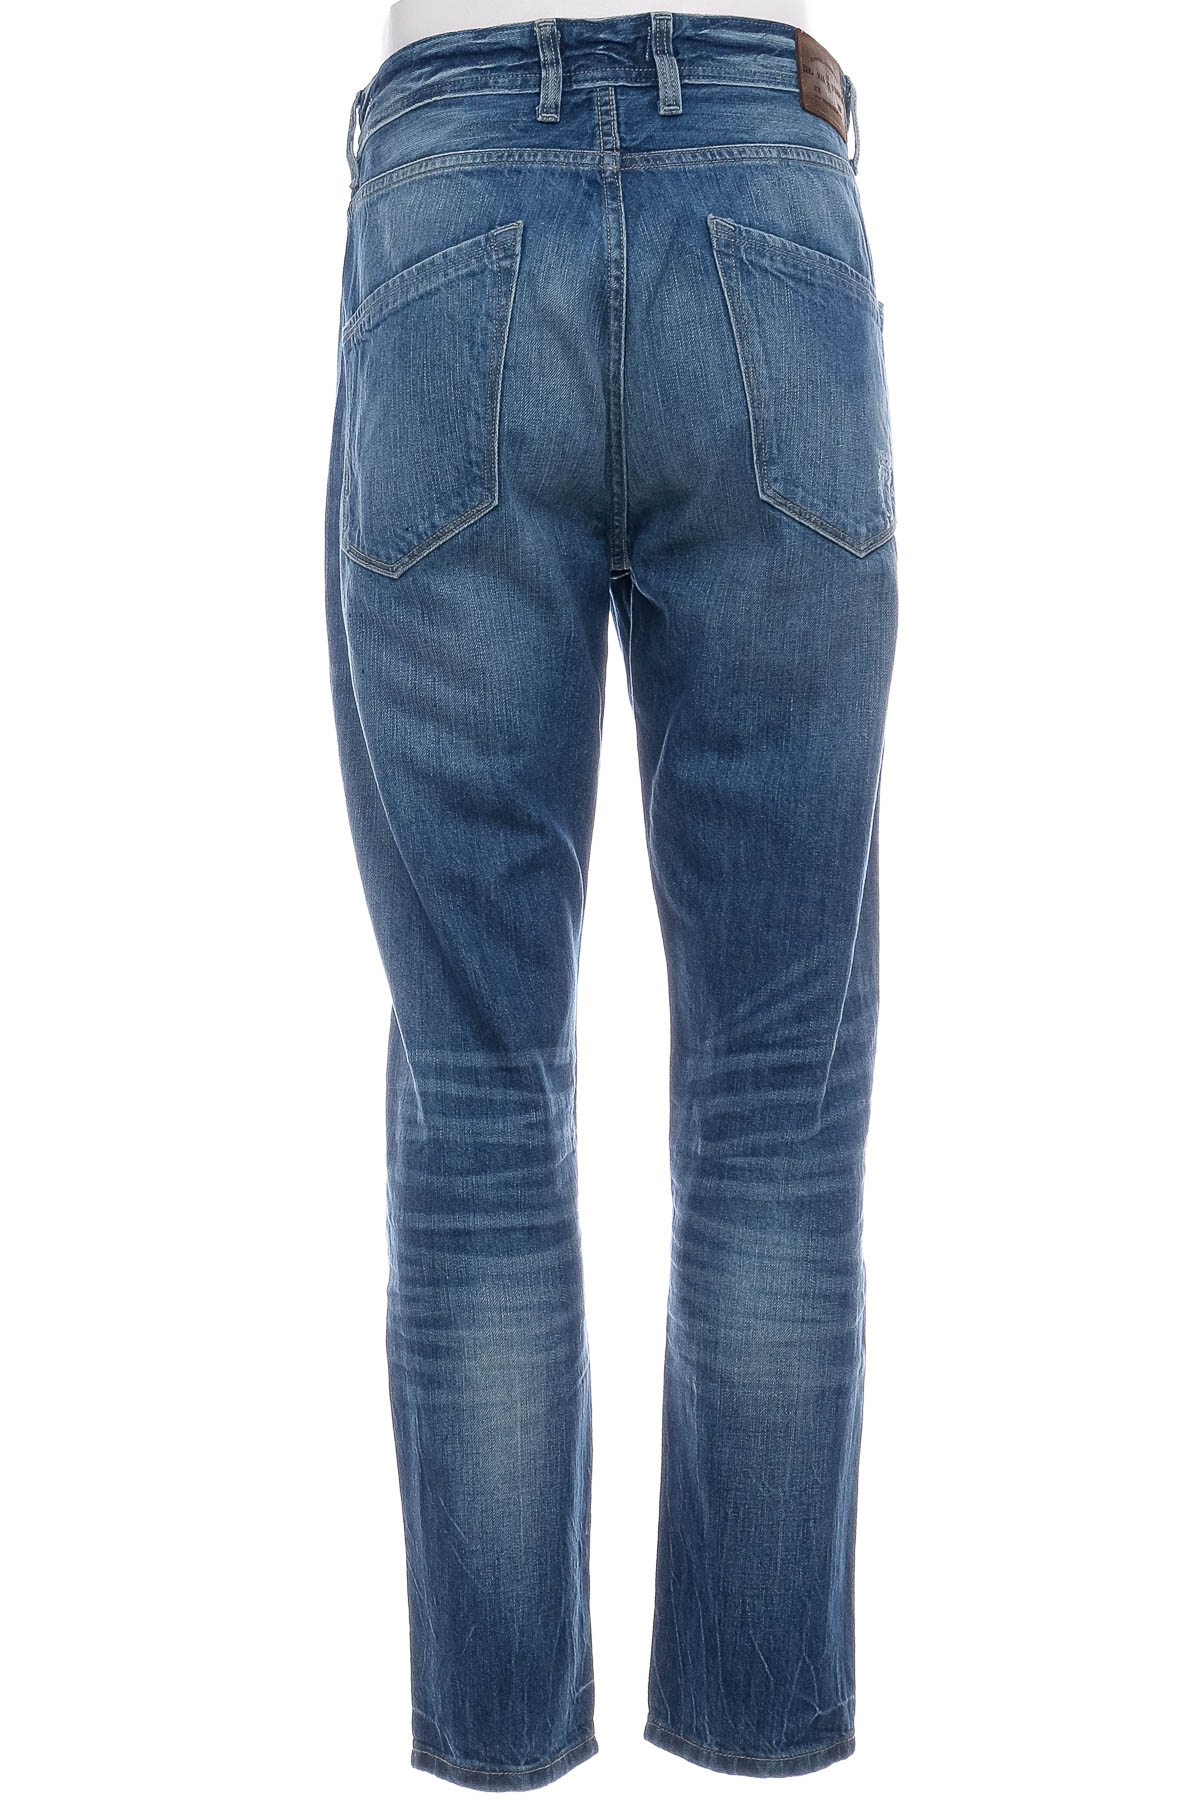 Men's jeans - ZARA Man - 1